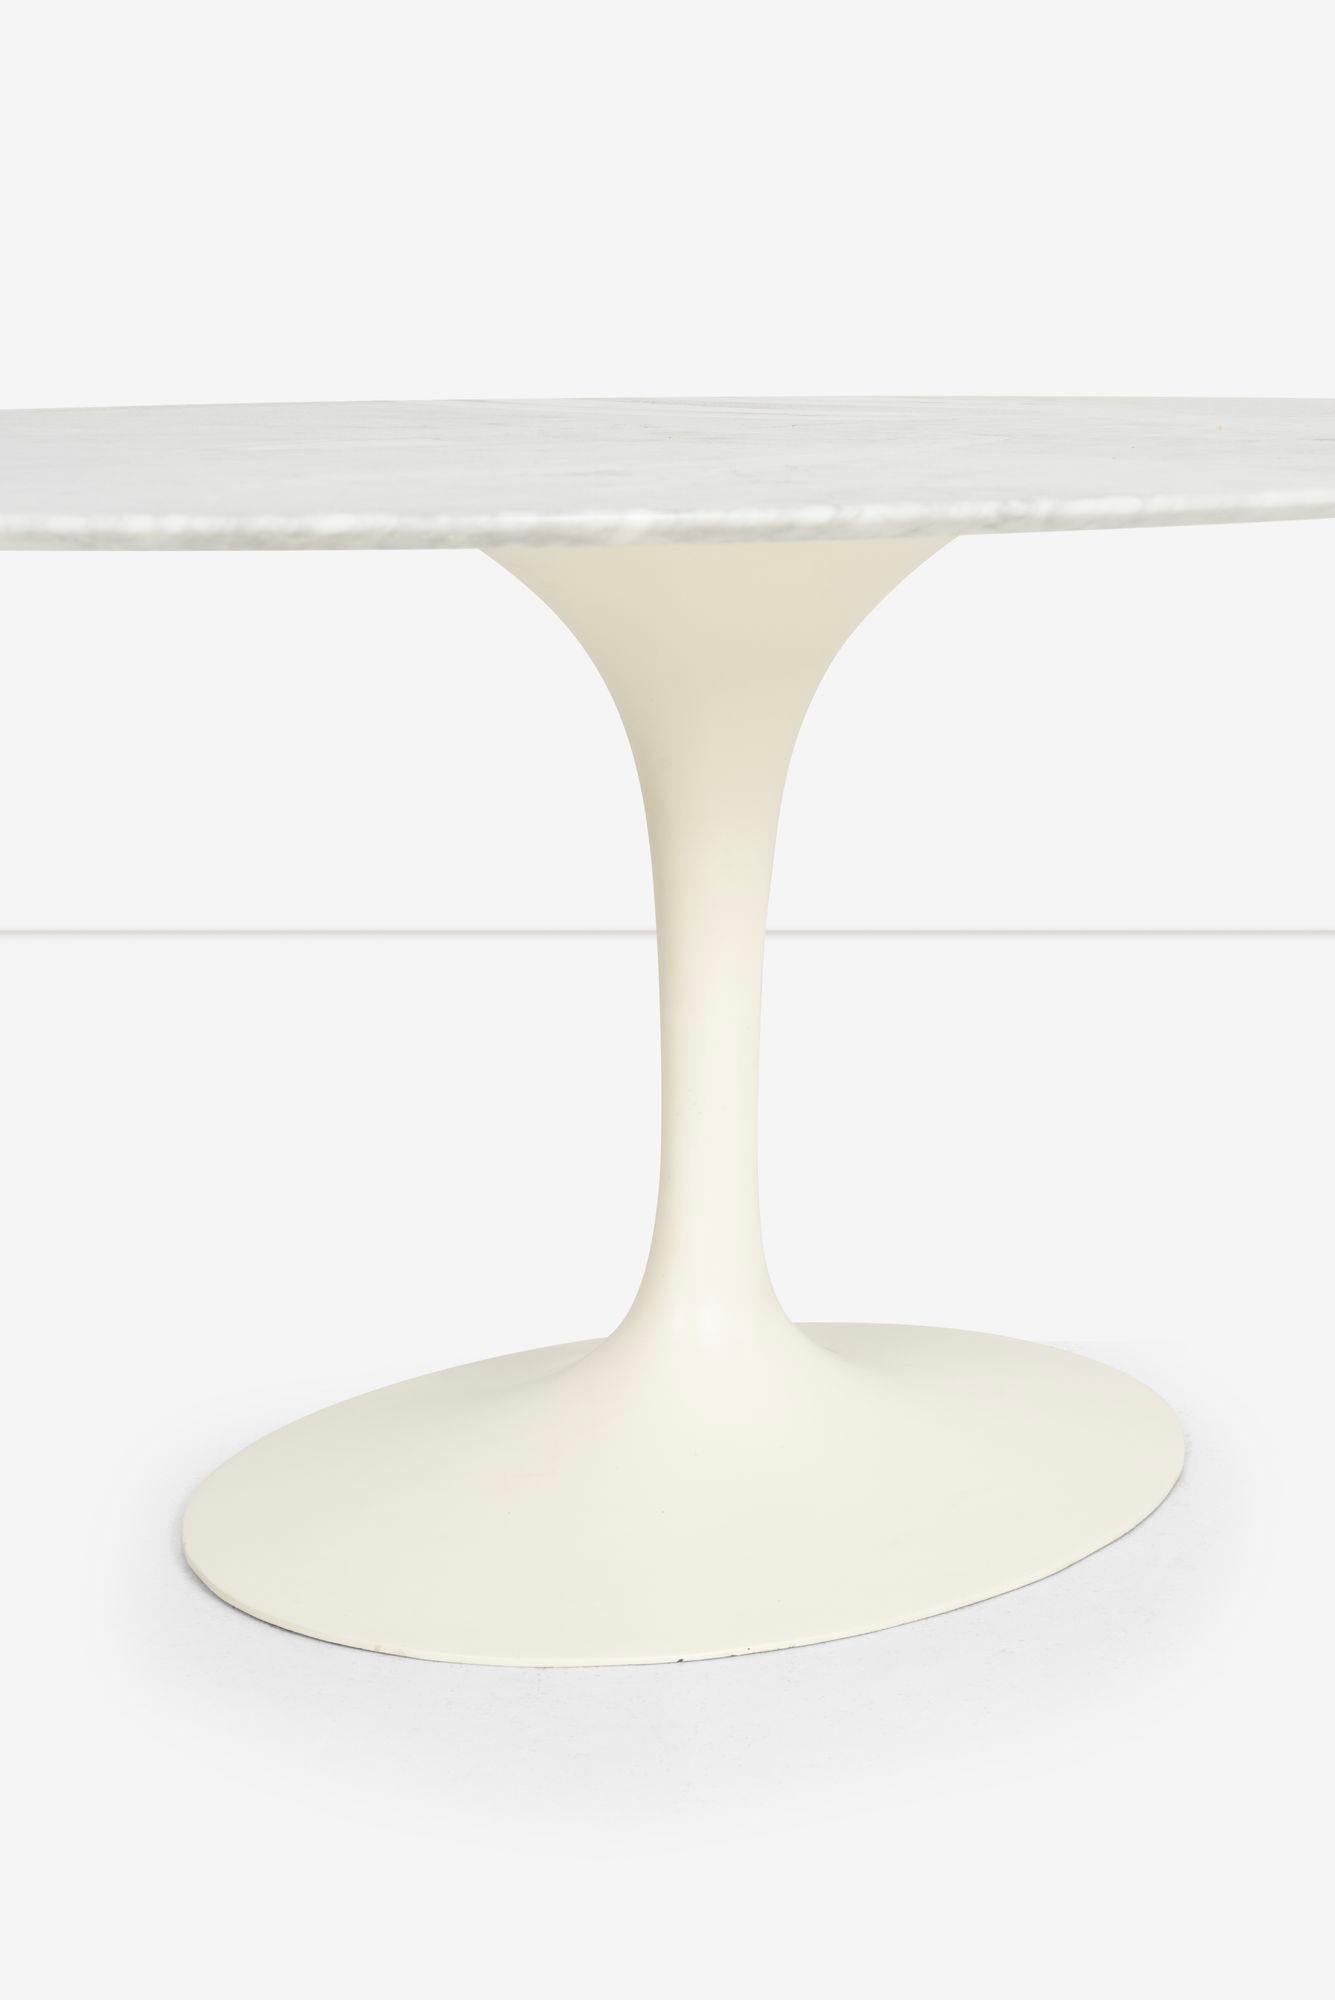 Mid-20th Century Early Vintage Eero Saarinen Tulip Table, Carrara Marble For Sale